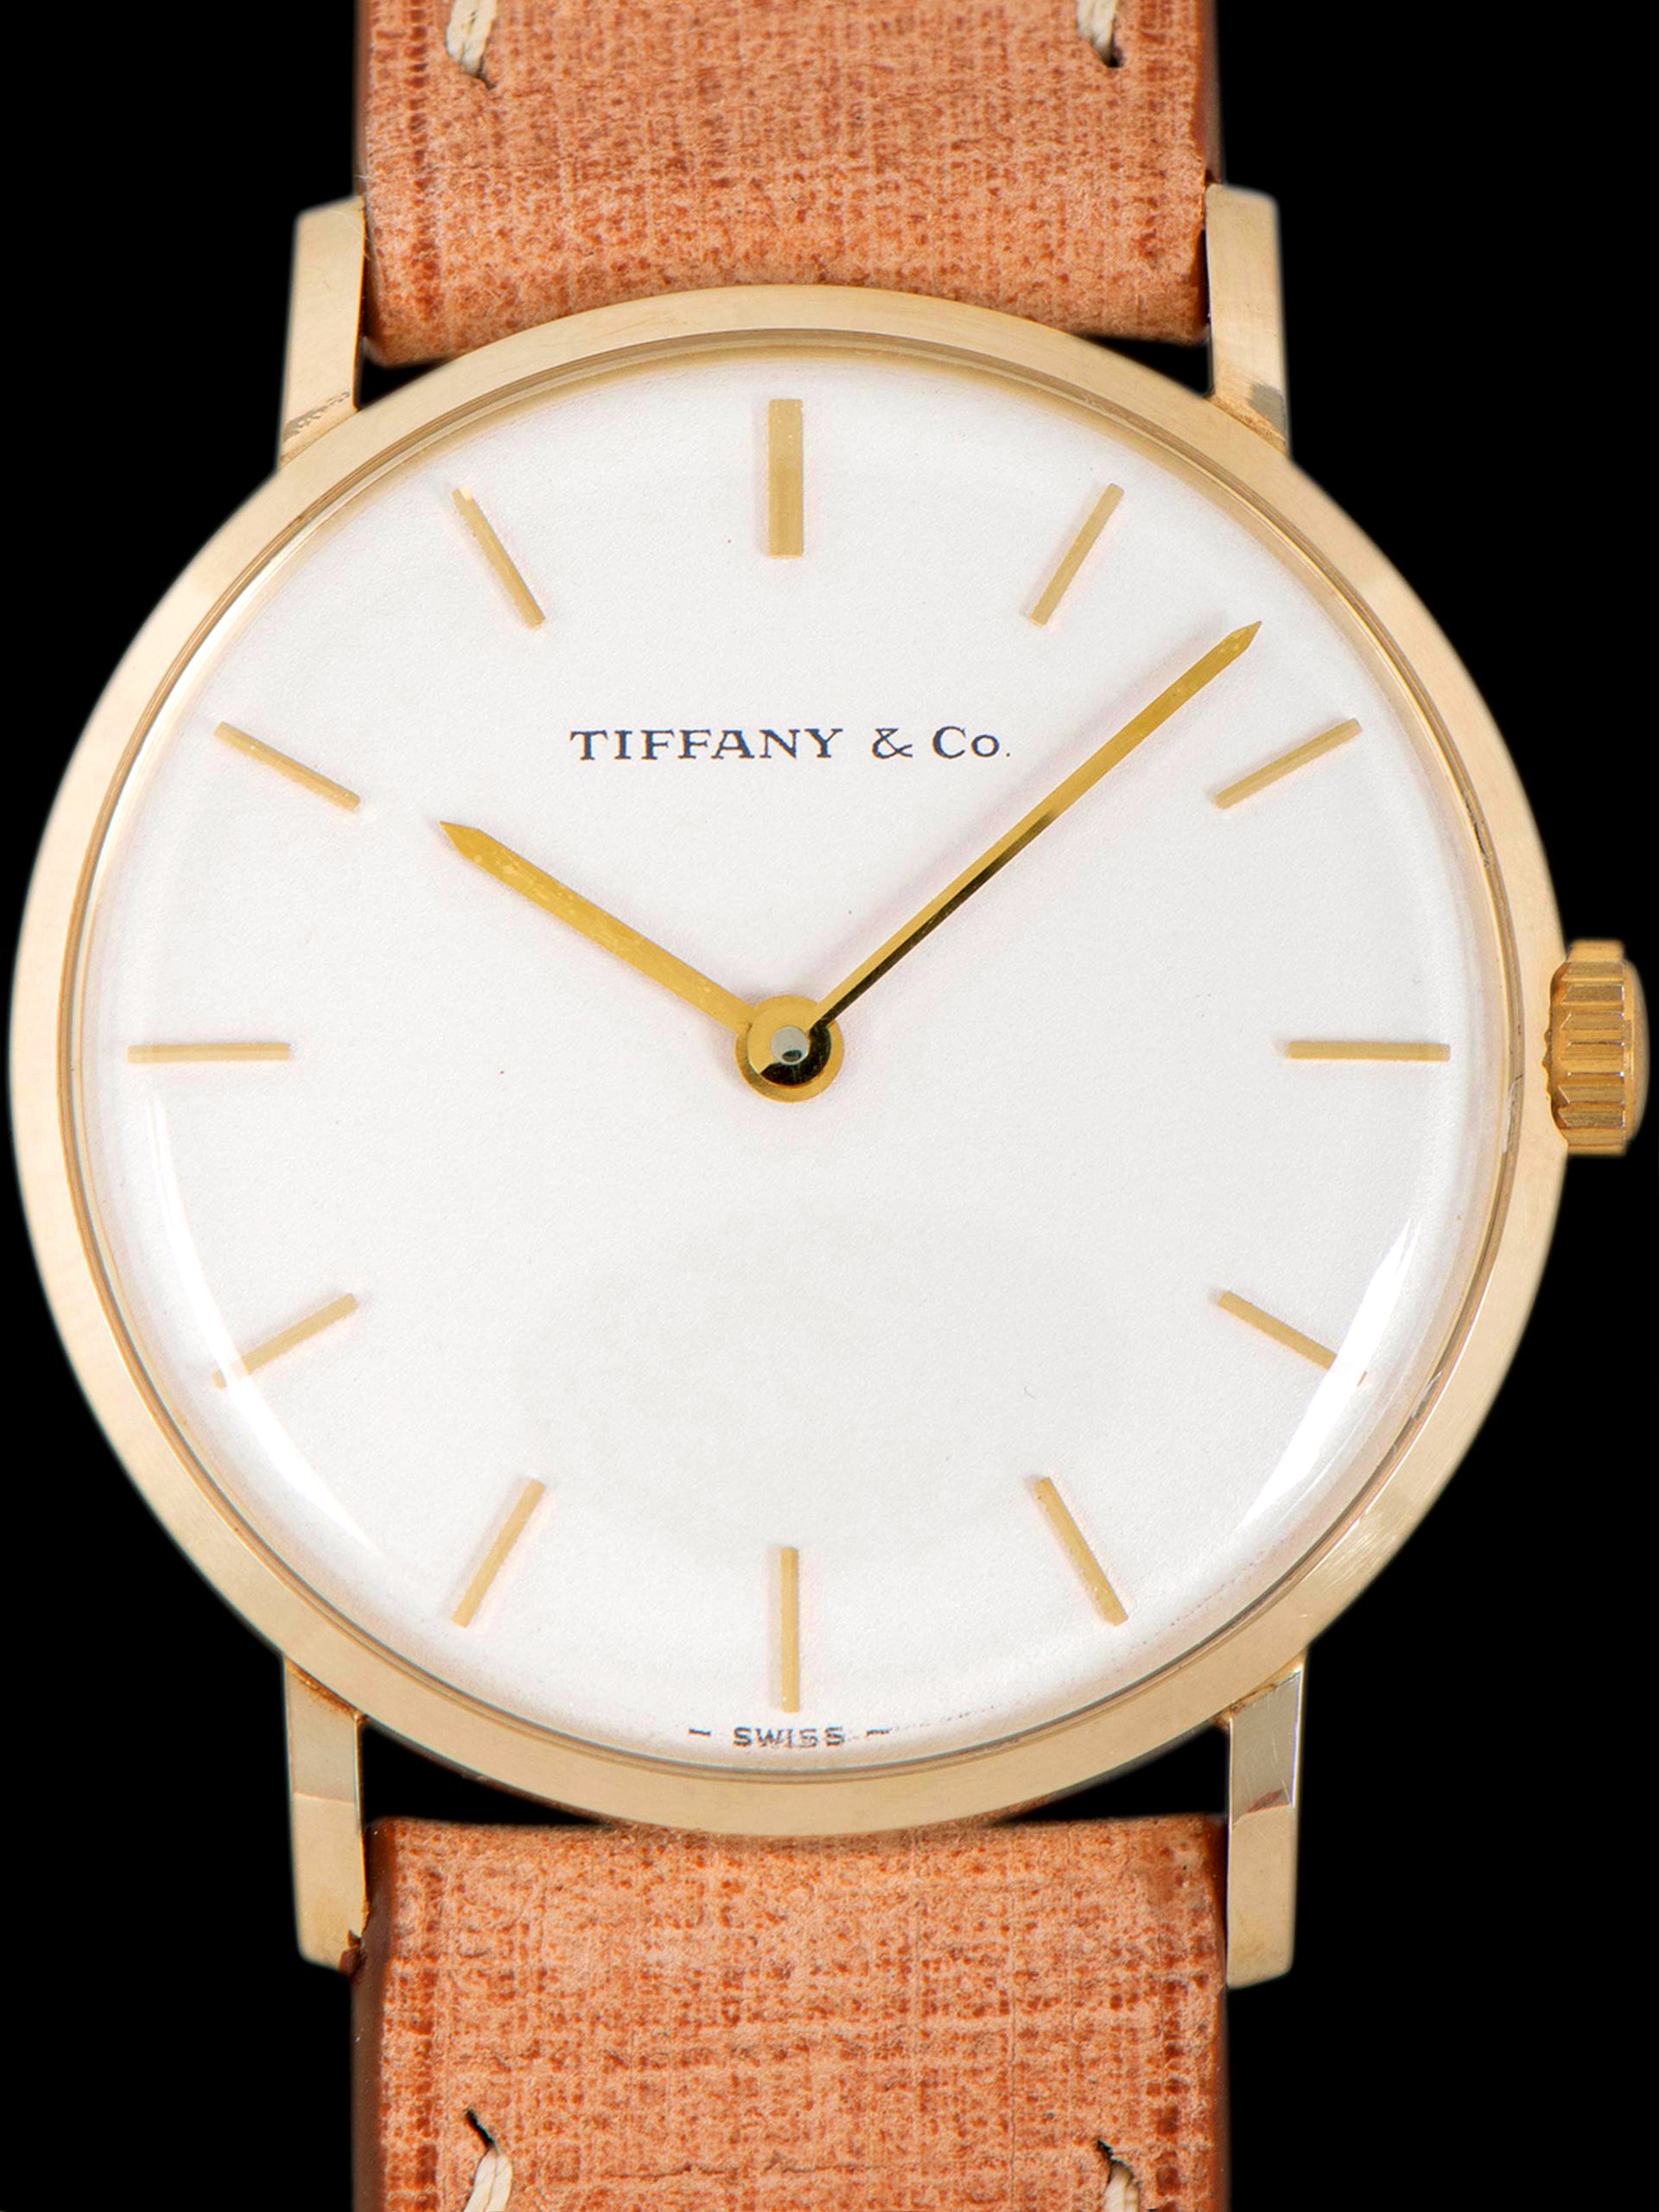 1976 Tiffany & Co. 14K YG Dress Watch "CBS Appreciation Award"